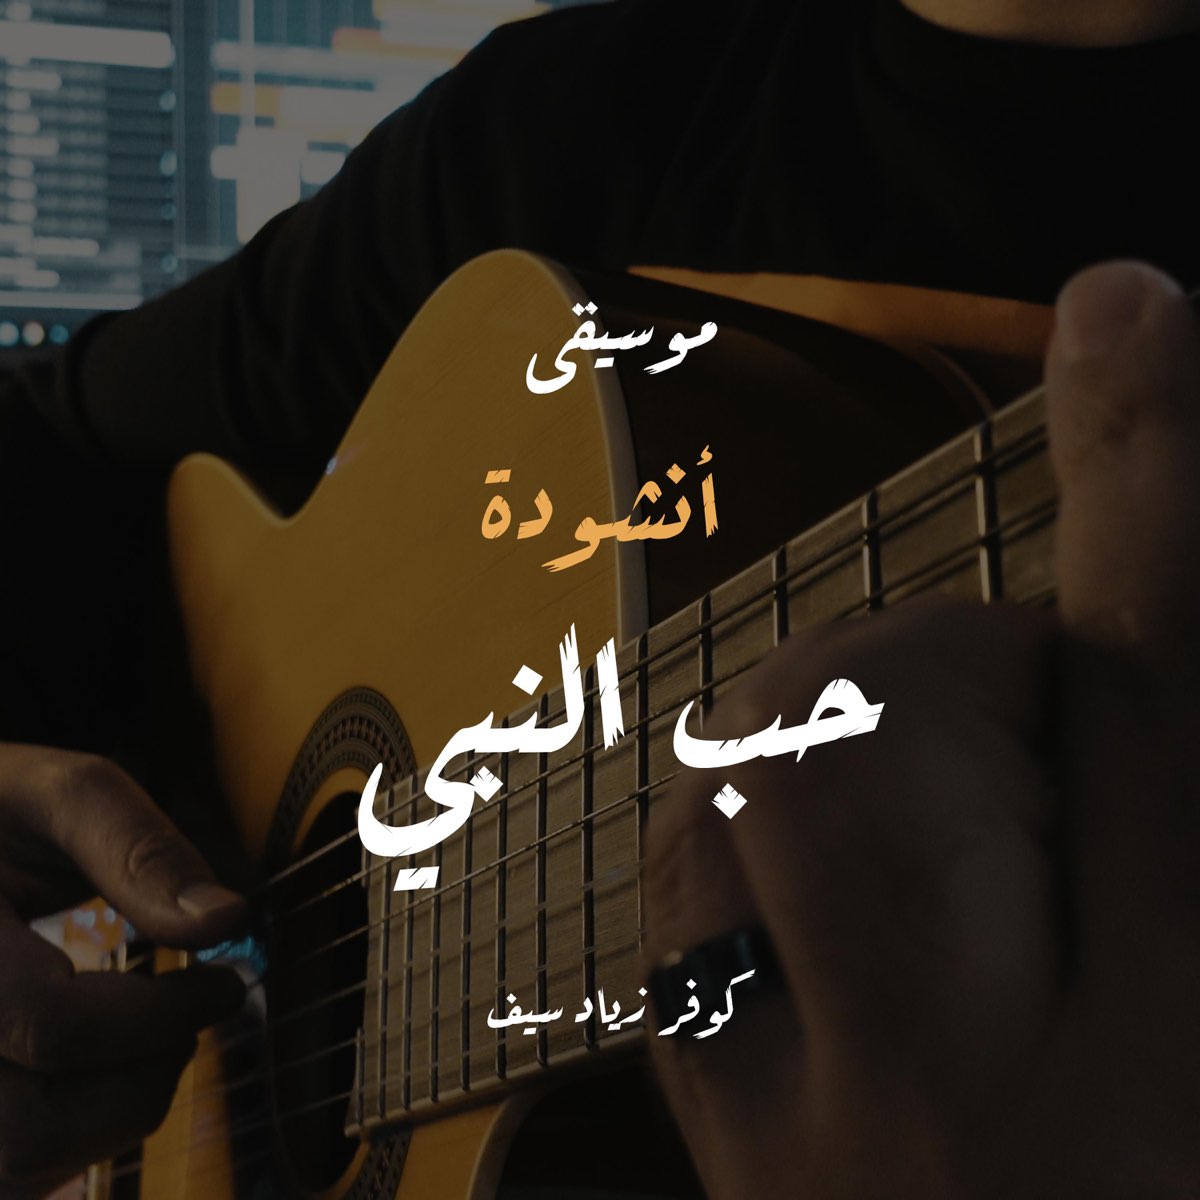 ماهر زين - حب النبي كوفر زياد سيف - Single - Album by Zyad Saif - Apple  Music